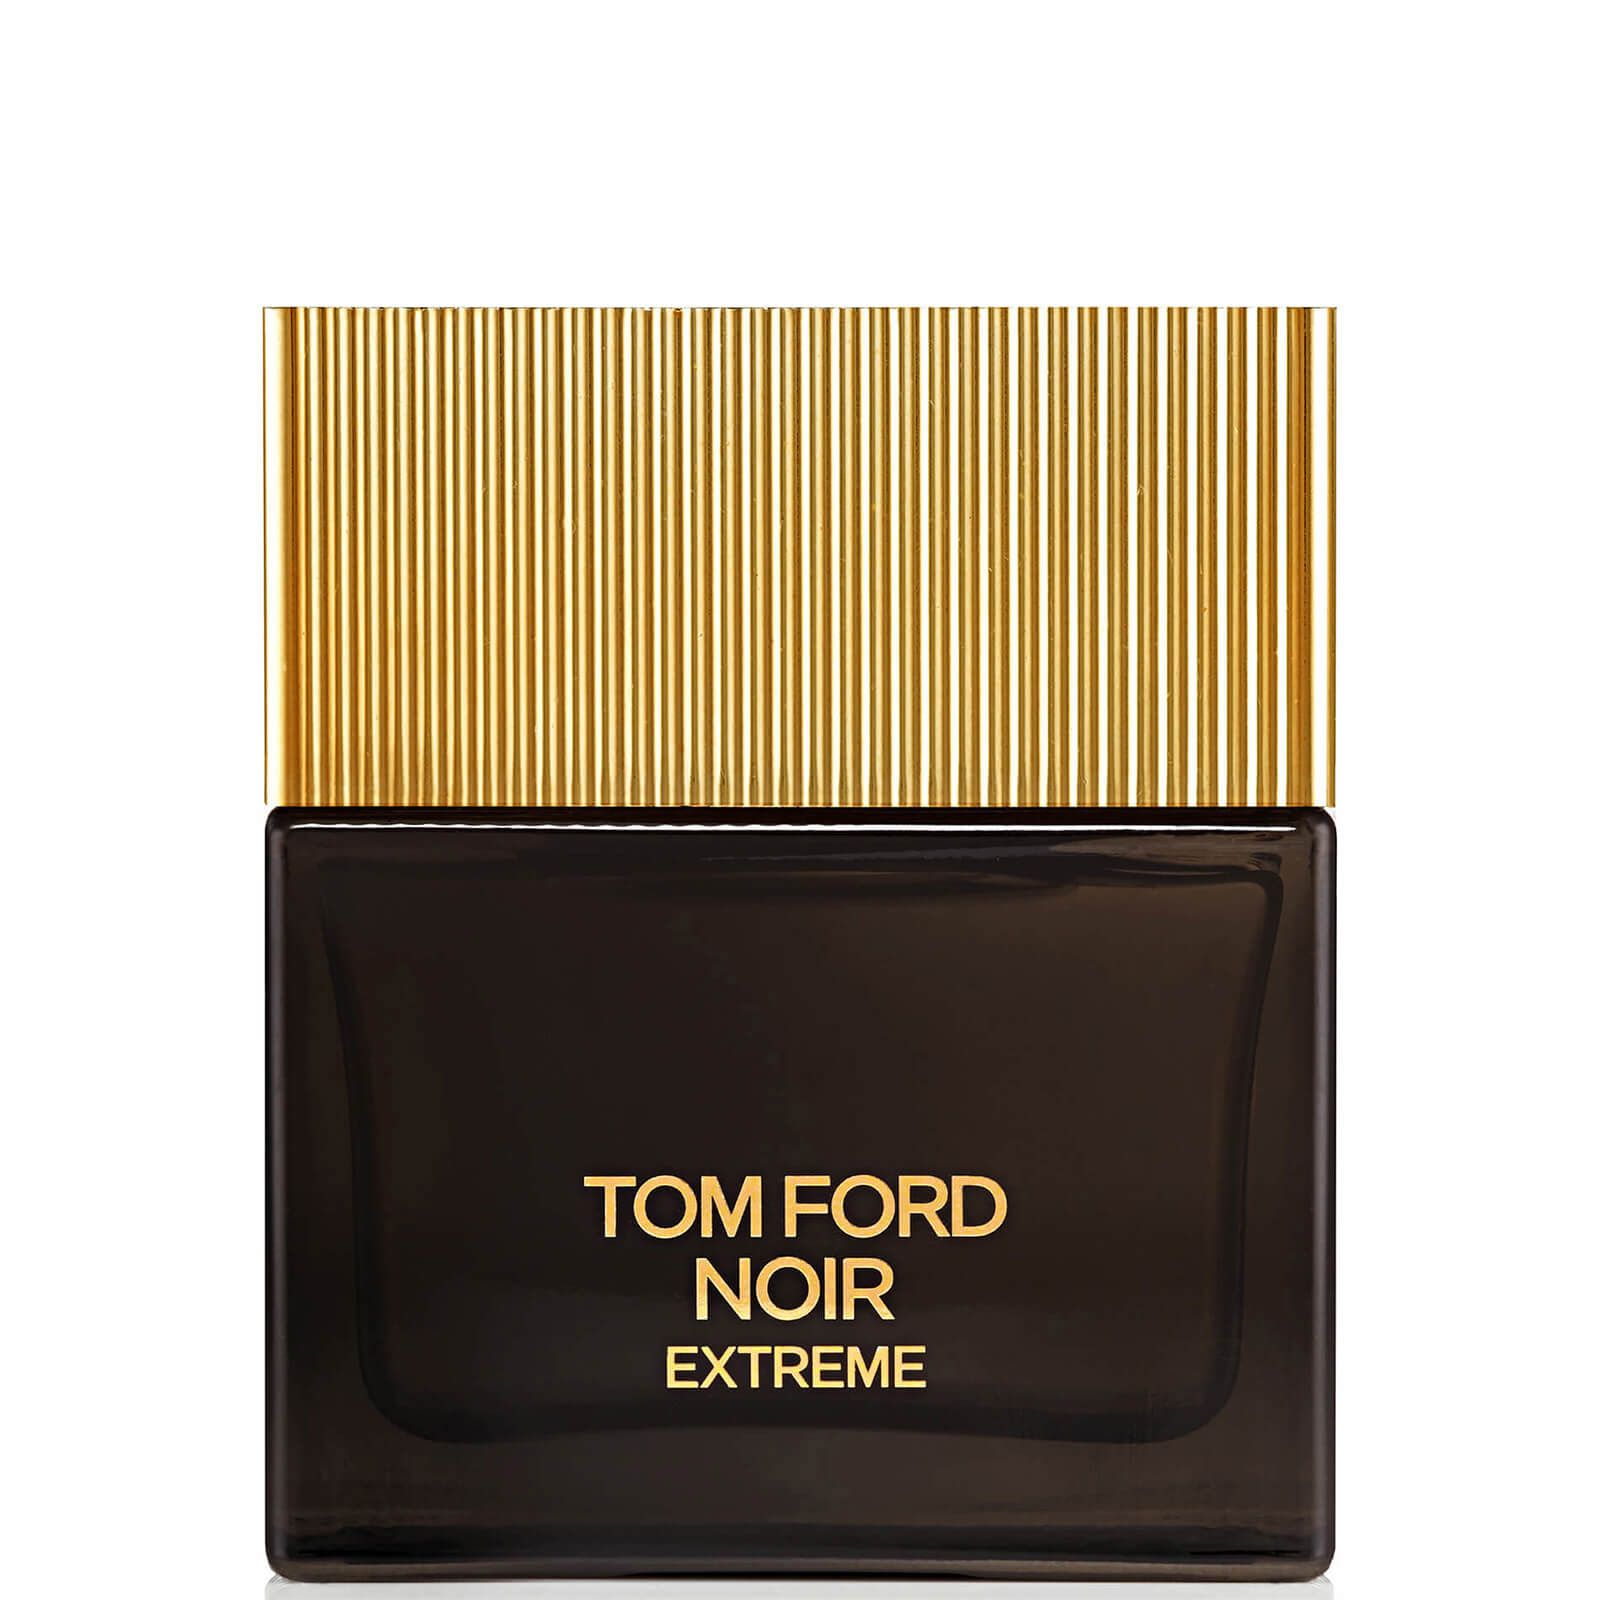 Tom Ford Noir extreme 100ml. Tom Ford Noir extreme Parfum. Духи Tom Ford Noir extreme. Tom Ford Noir extreme 100. Том форд золотые духи